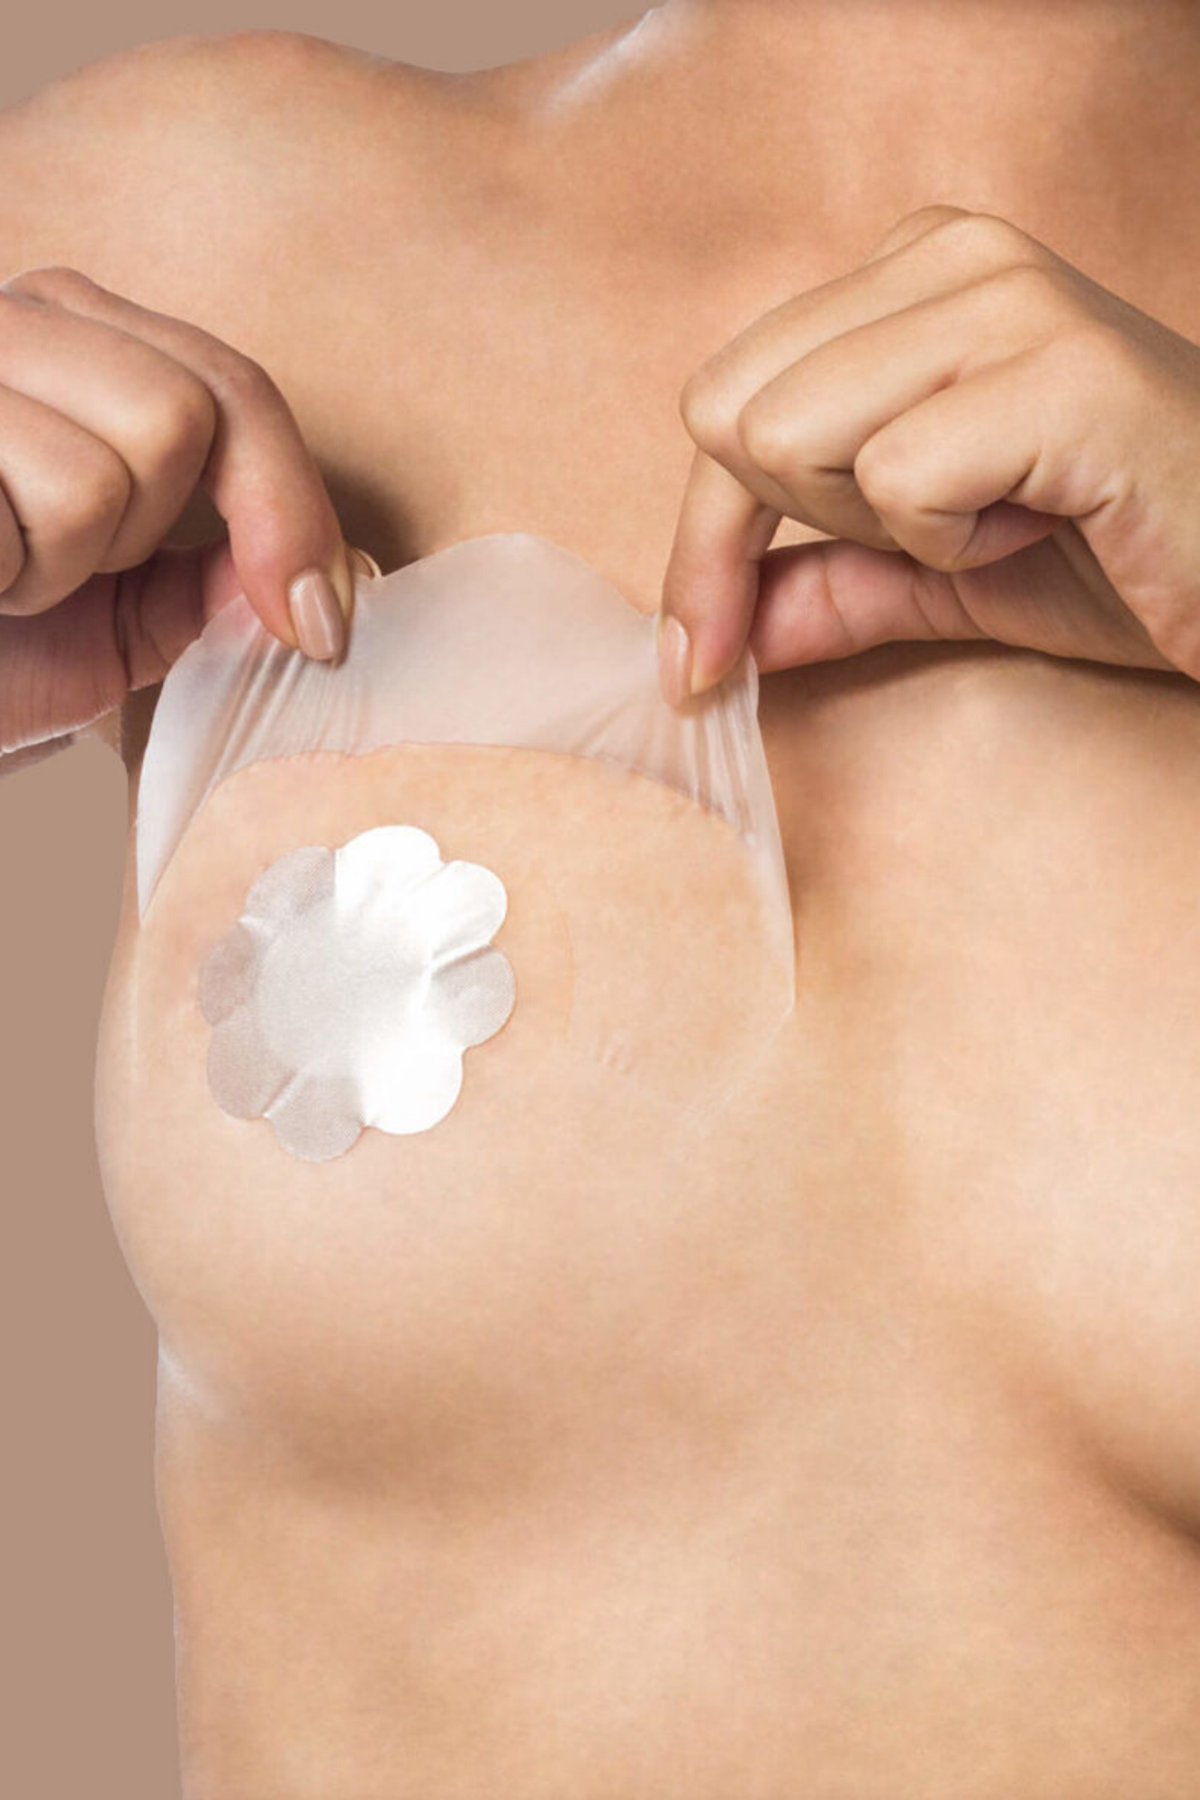 Breast Lift Adhesive Bra/ Ivee Lingerie Lebanon